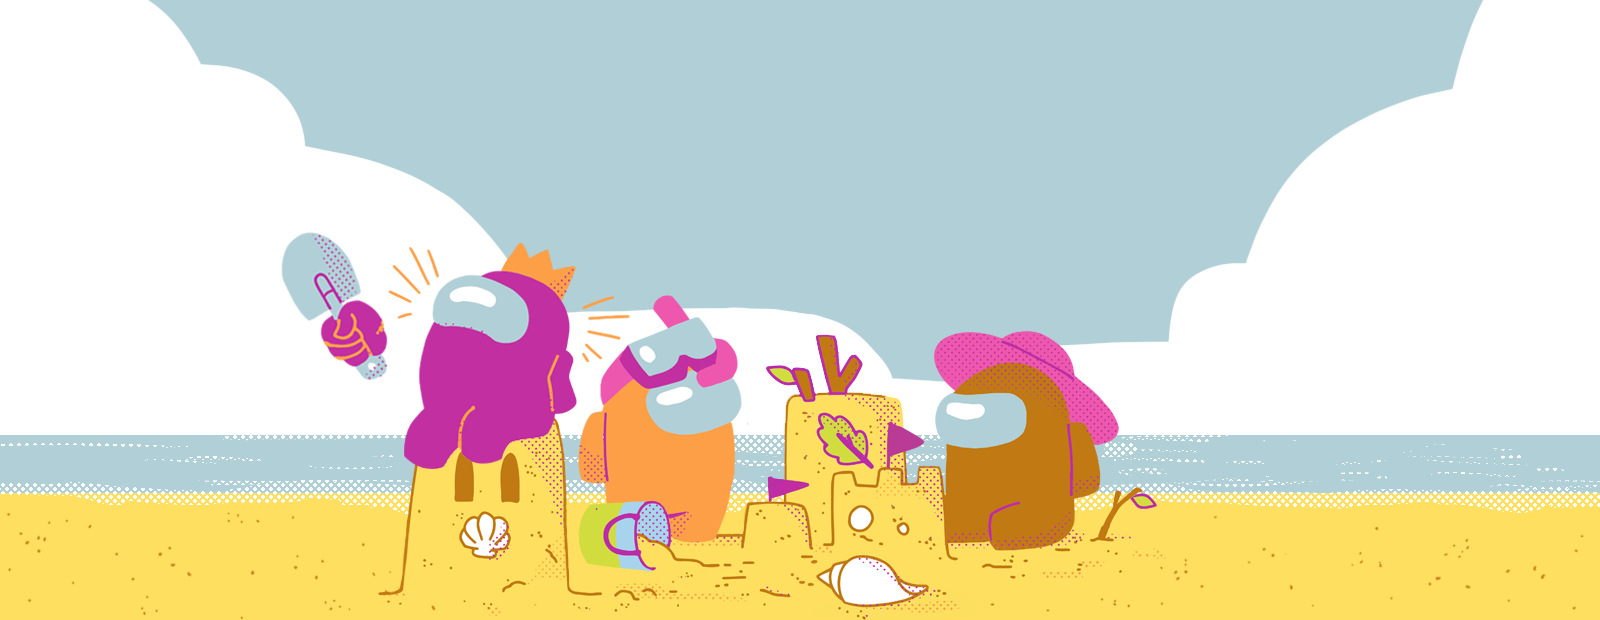 An illustration of three crewmates building sandcastles on the beach.